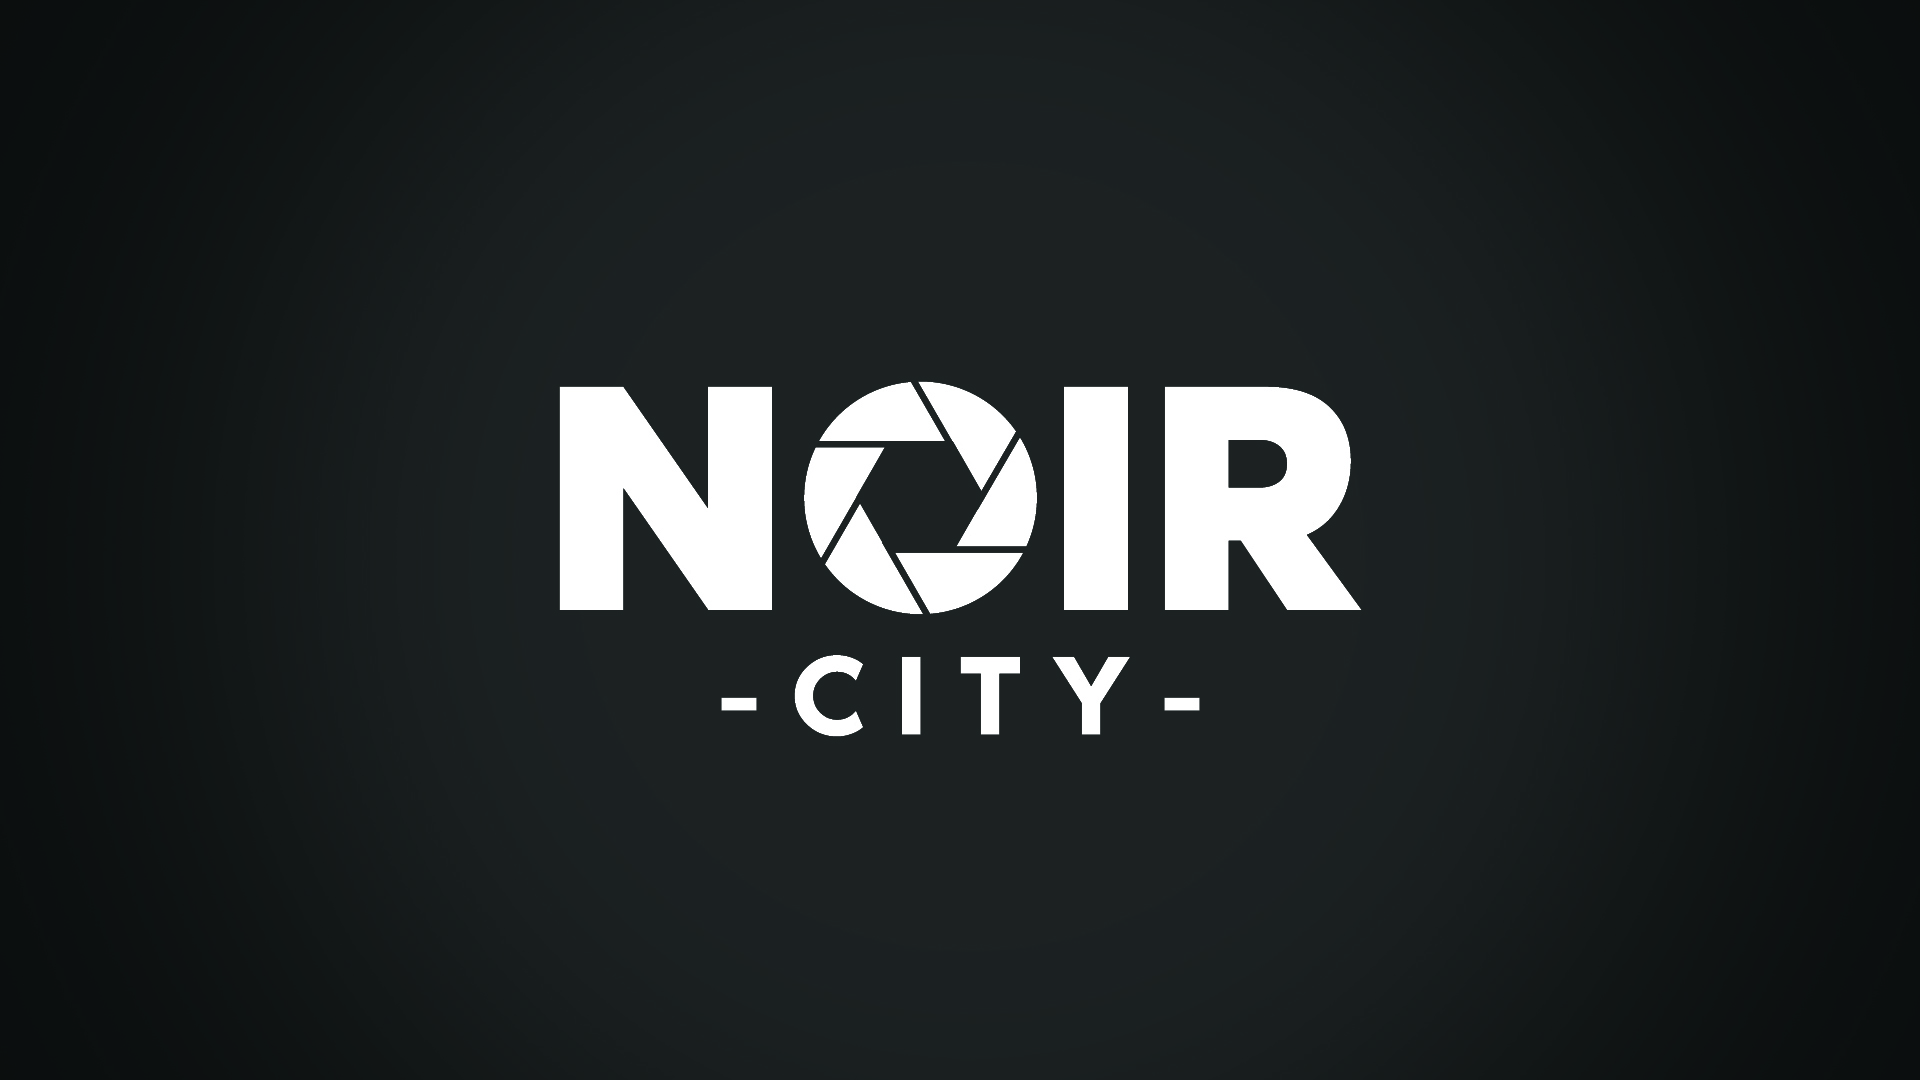 NOIR City